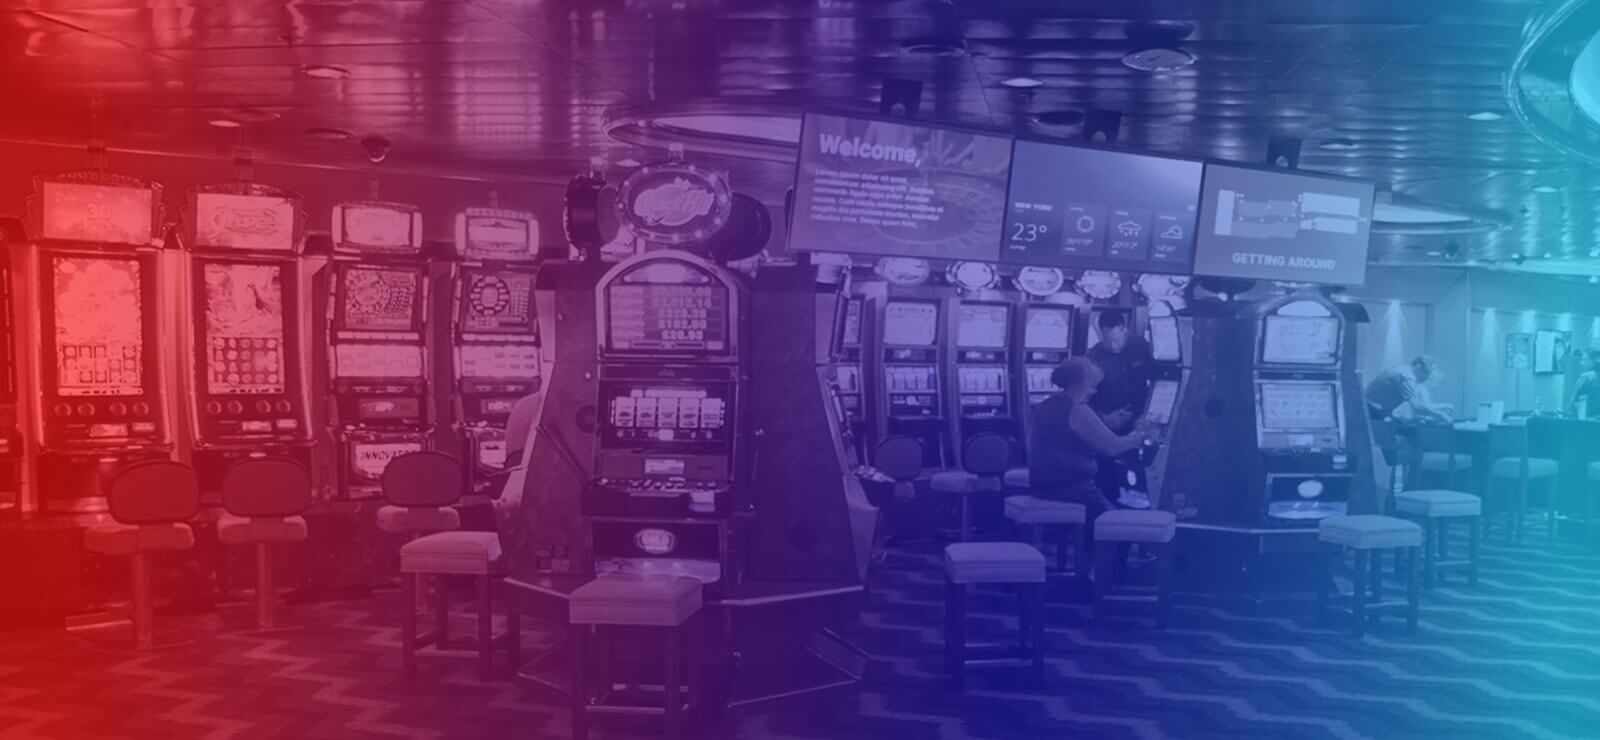 w69 casino